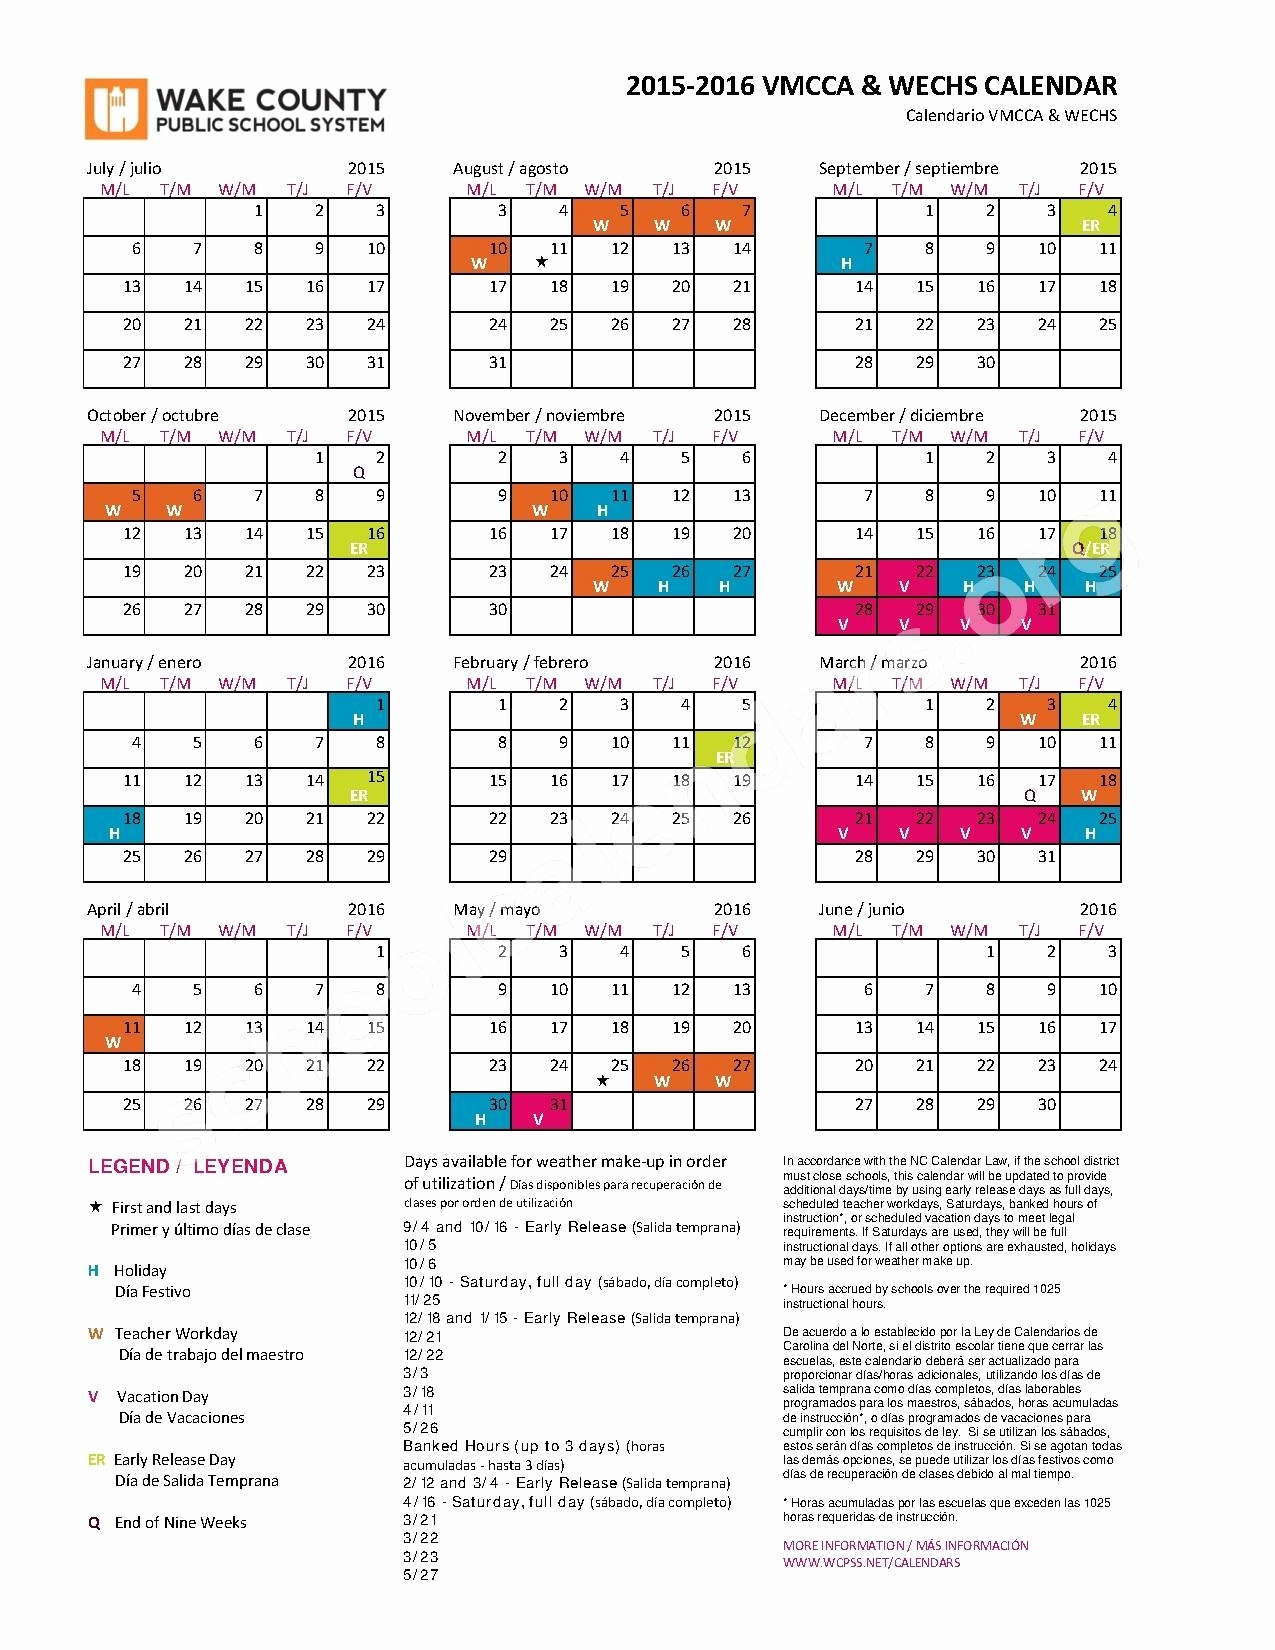 Wake County School Calendar 2018 2015 2016 Early College Vernon School Calendar Wake County